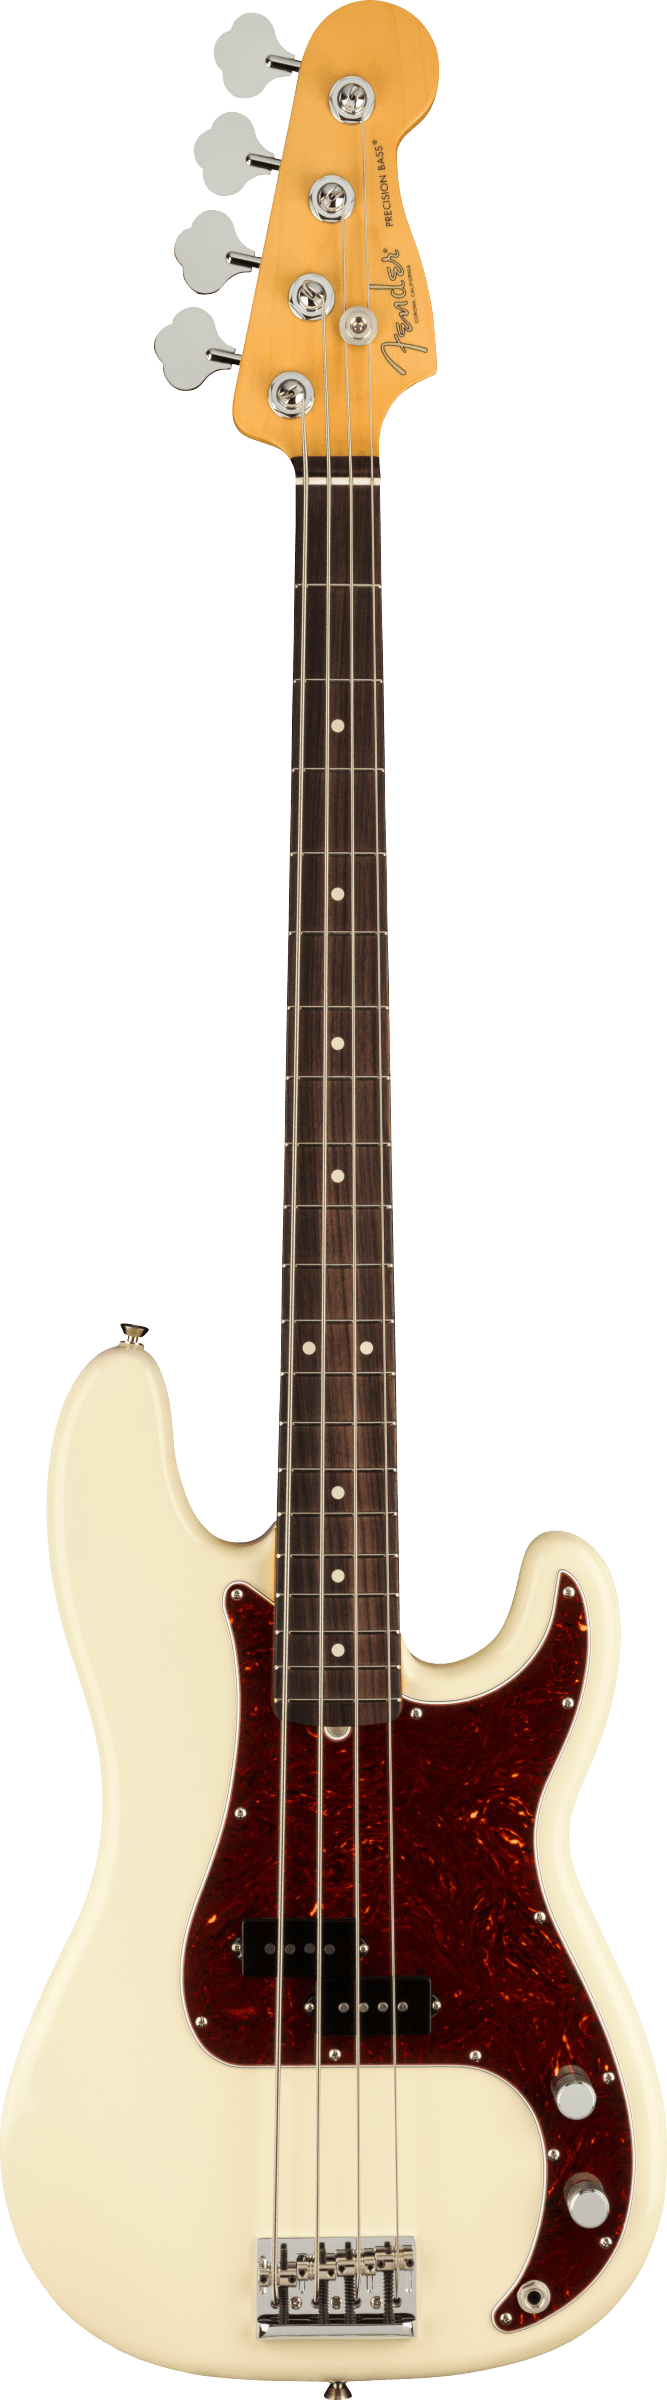 Fender Precision Bass RW in Olympic White Tone Shop Guitars Dallas Fort Worth